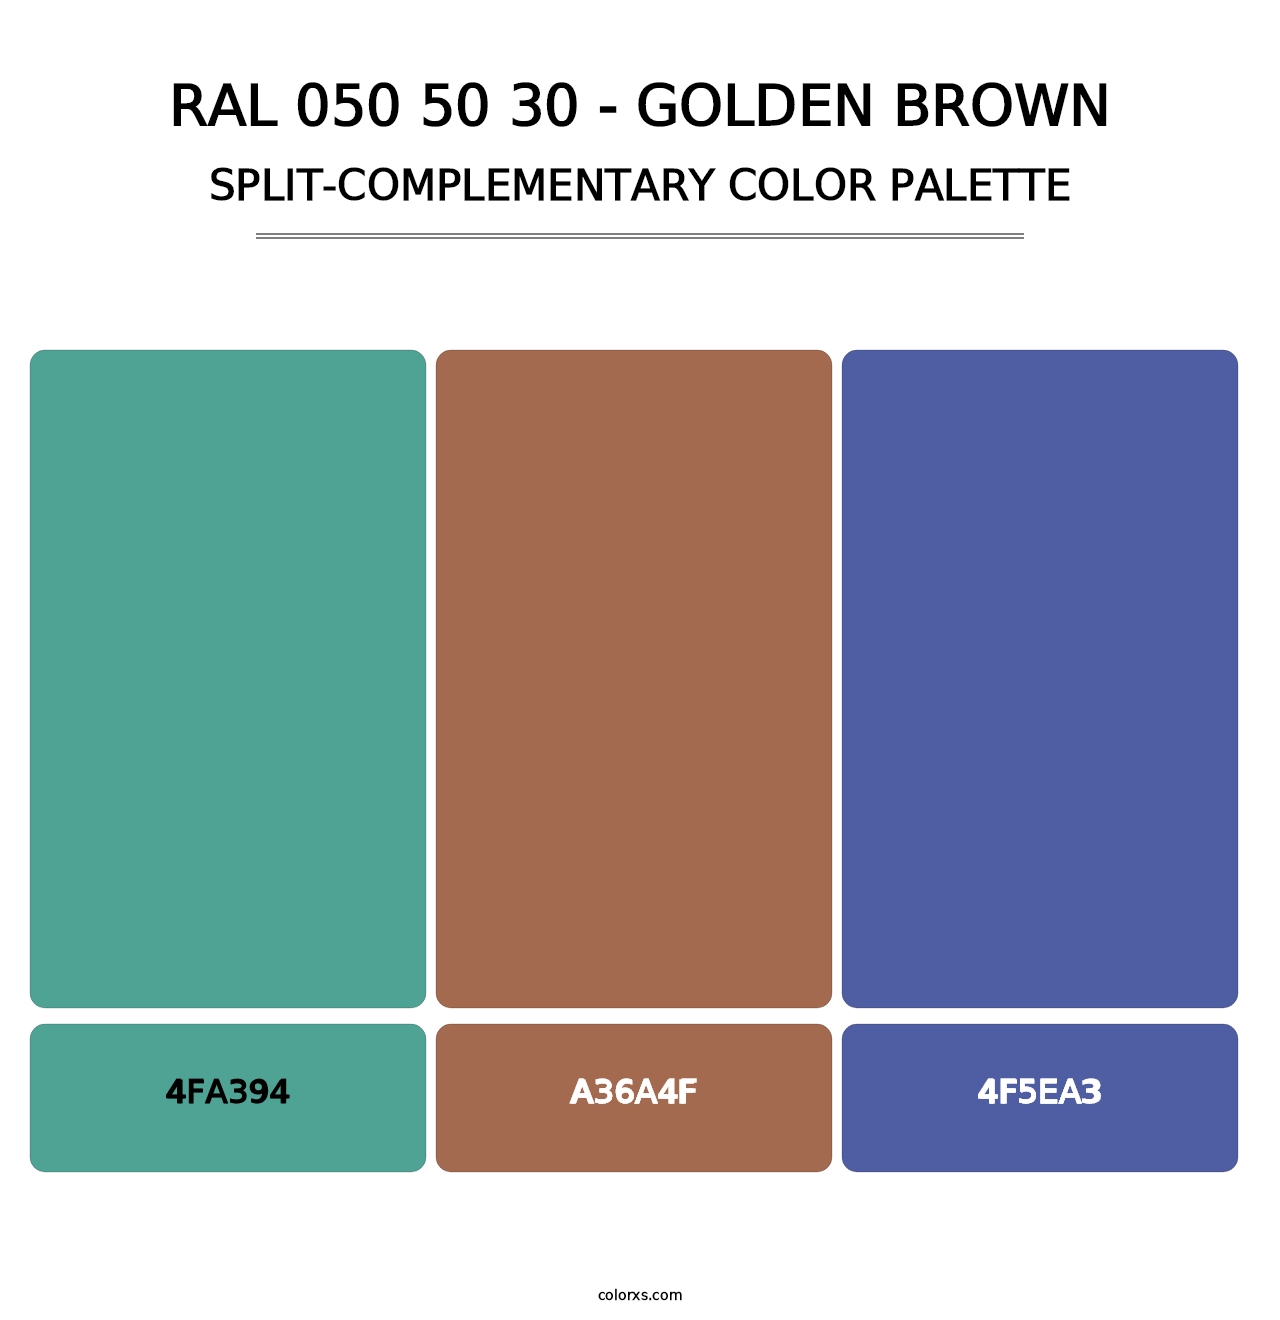 RAL 050 50 30 - Golden Brown - Split-Complementary Color Palette